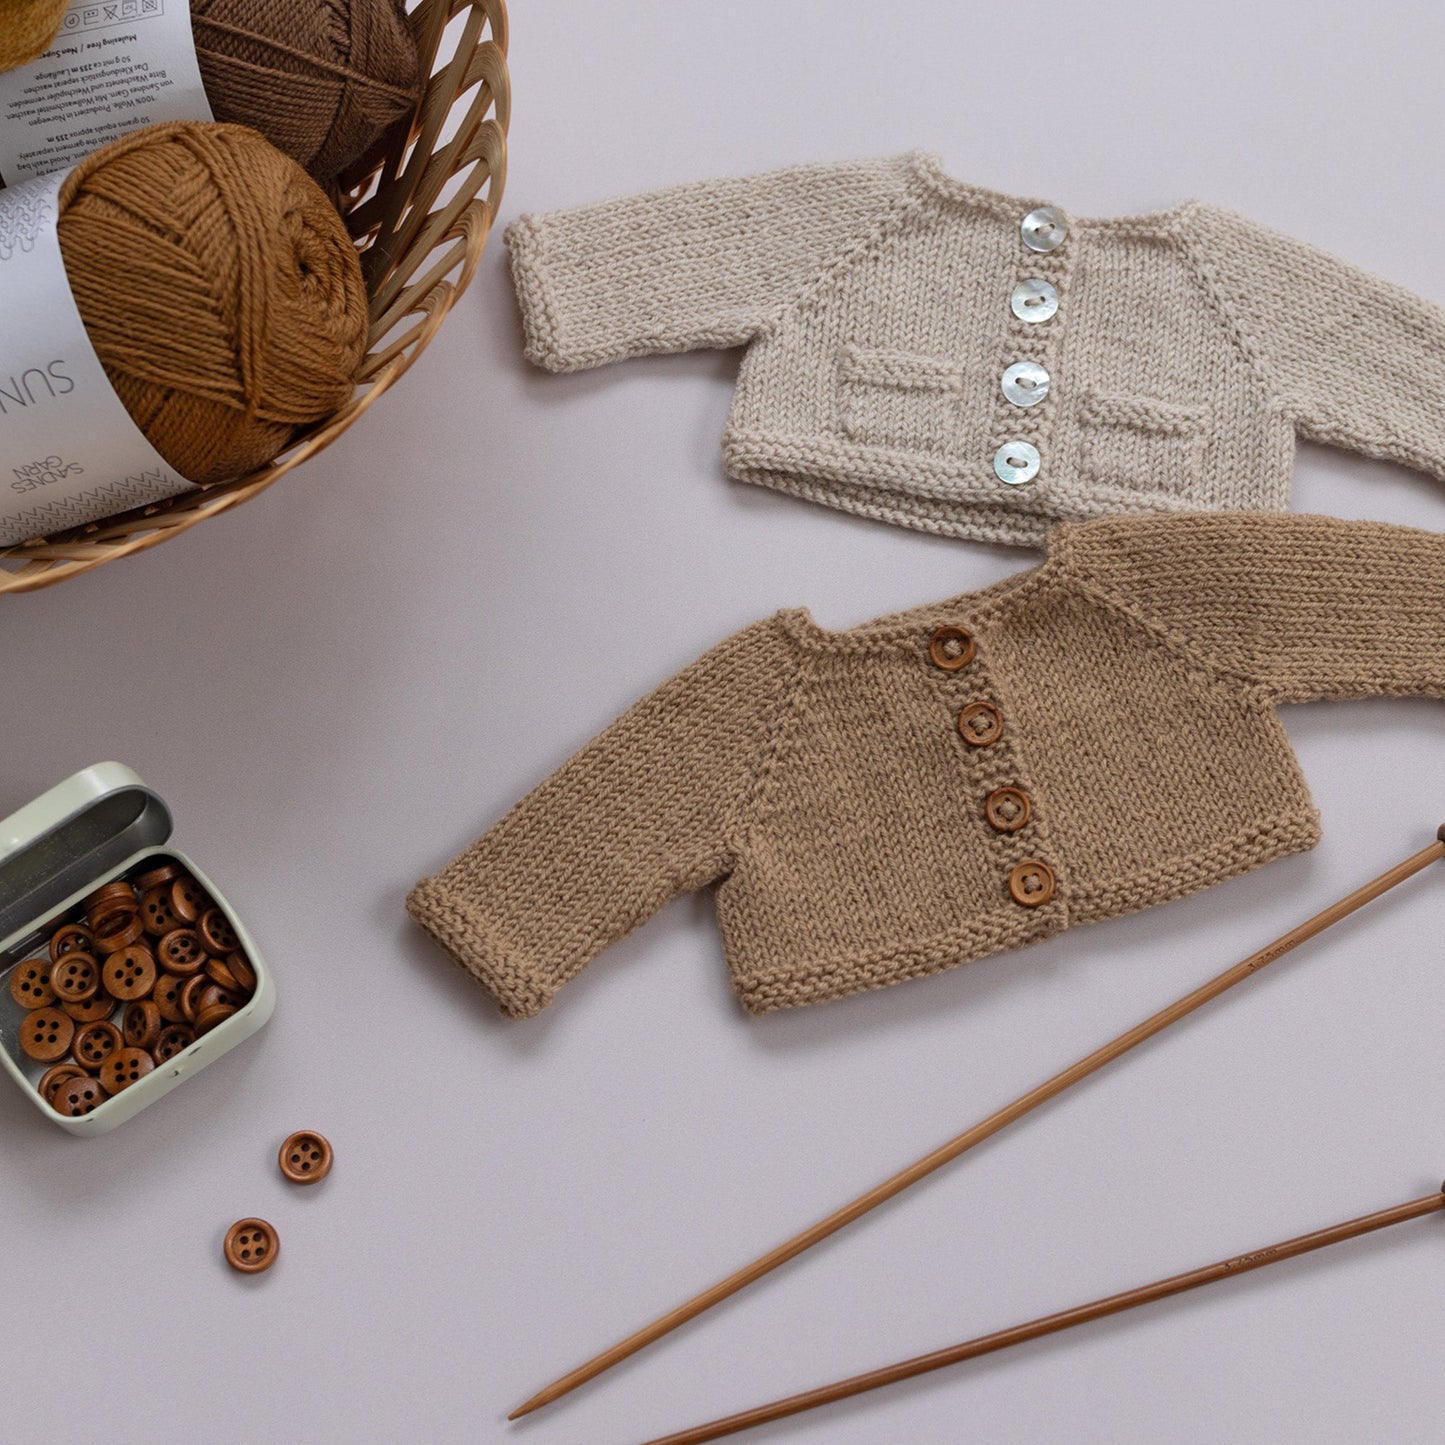 Bella cardigan knitting pattern - Studio Seren